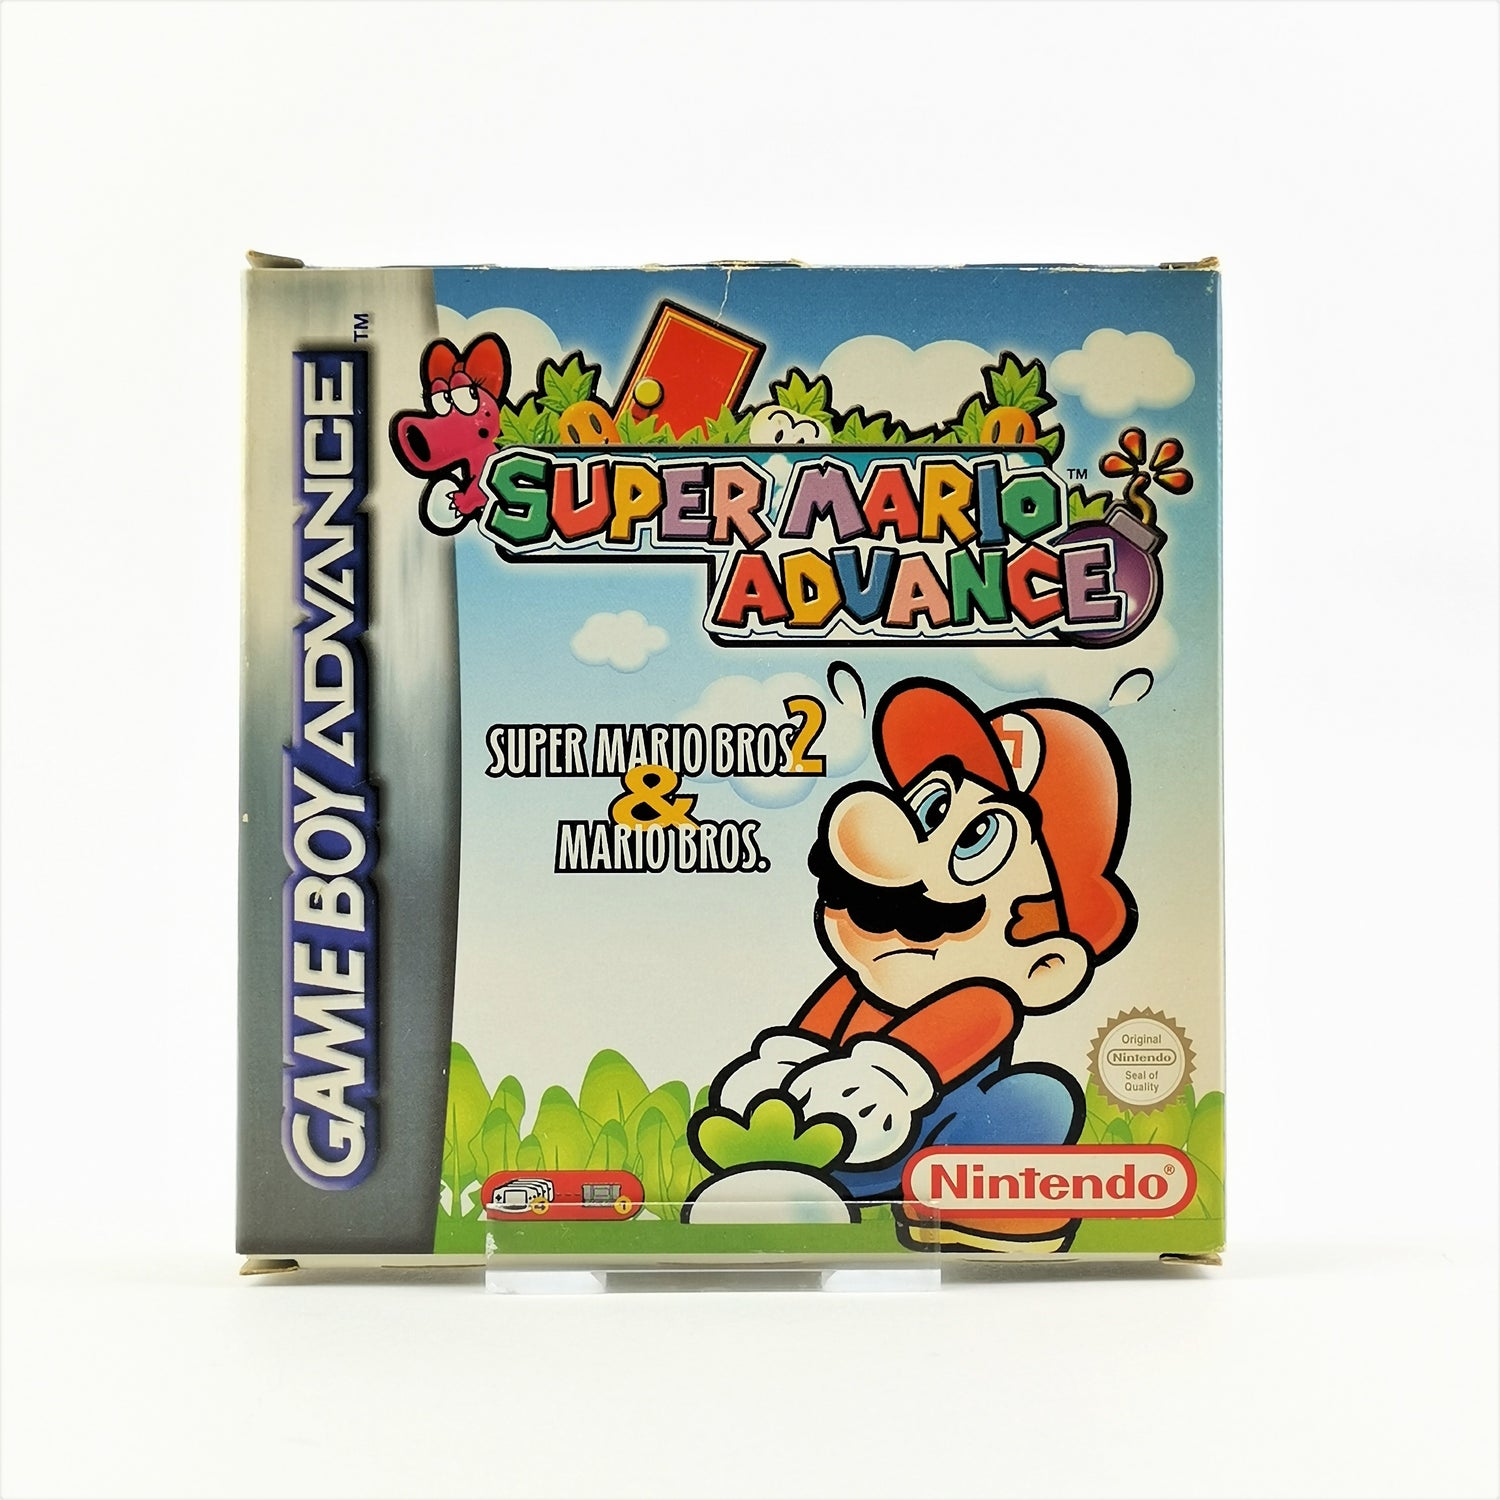 Nintendo Game Boy Advance Game: Super Mario Bros 2 Advance - OVP Instructions GBA